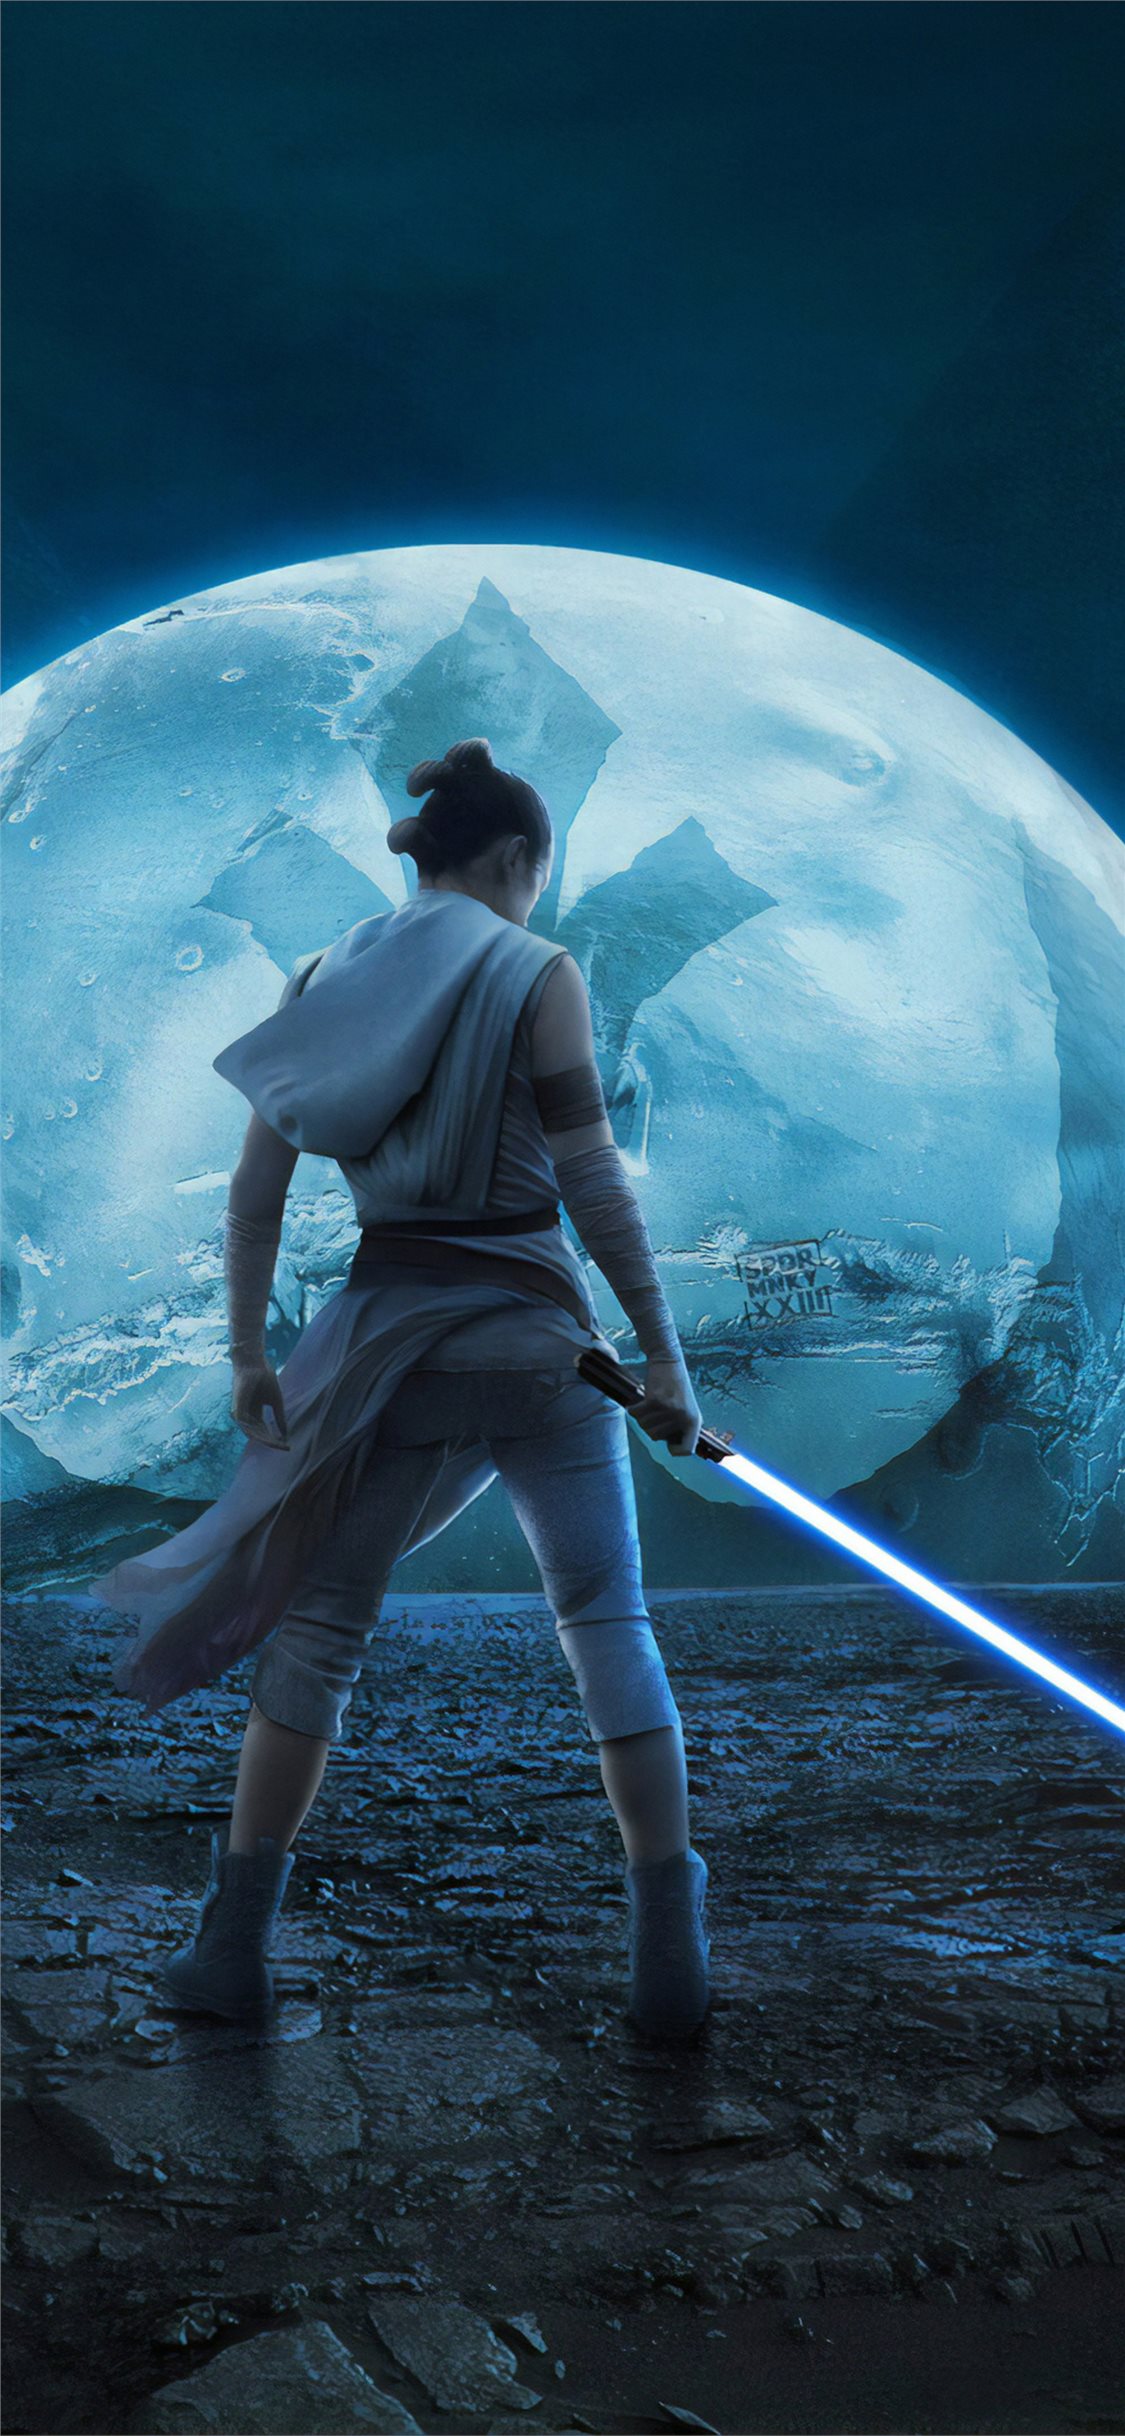 instal the last version for iphoneStar Wars: The Rise of Skywalker